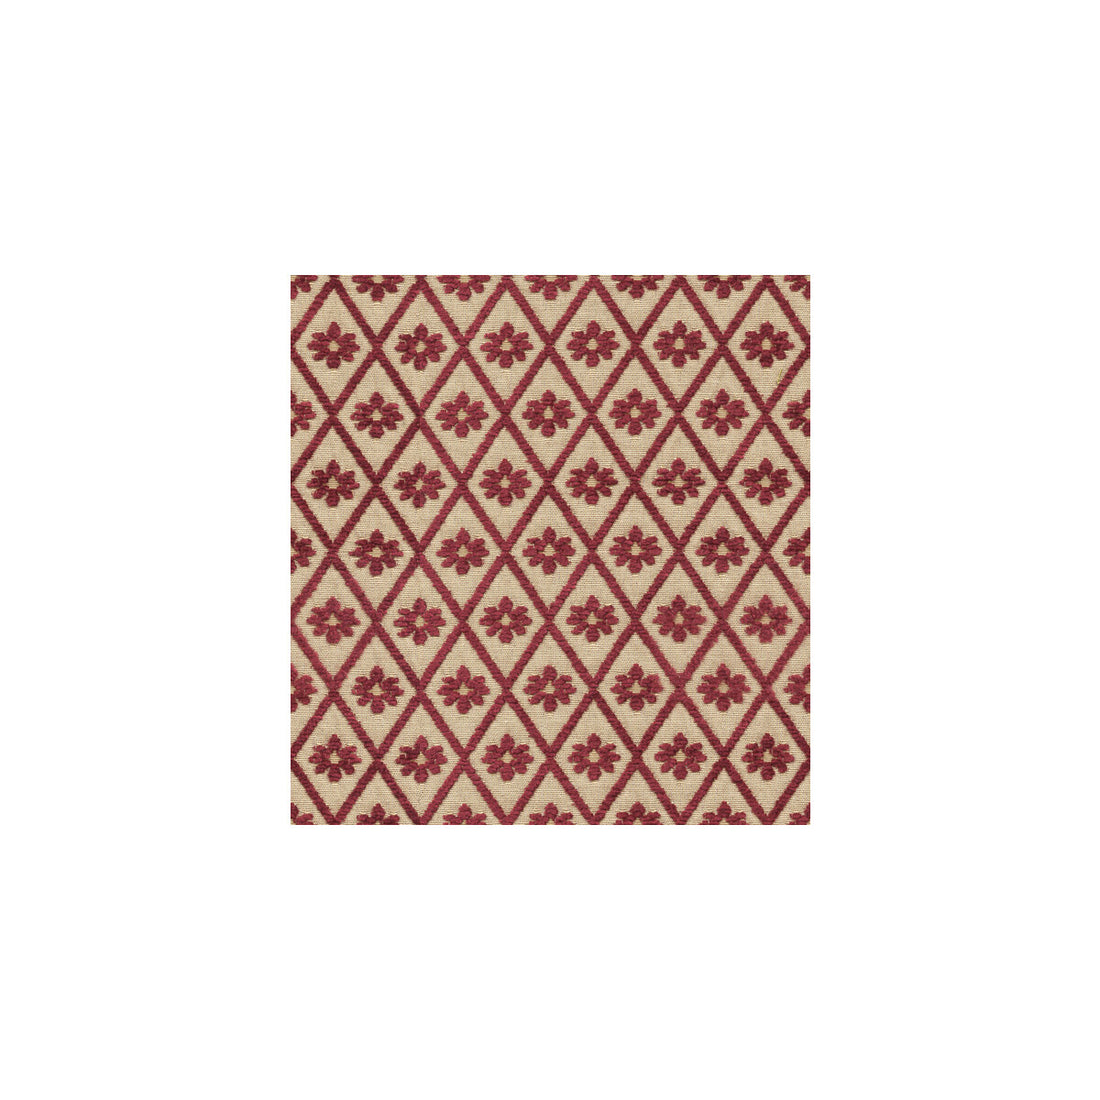 Kravet Design fabric in 31390-9 color - pattern 31390.9.0 - by Kravet Design in the Gis collection